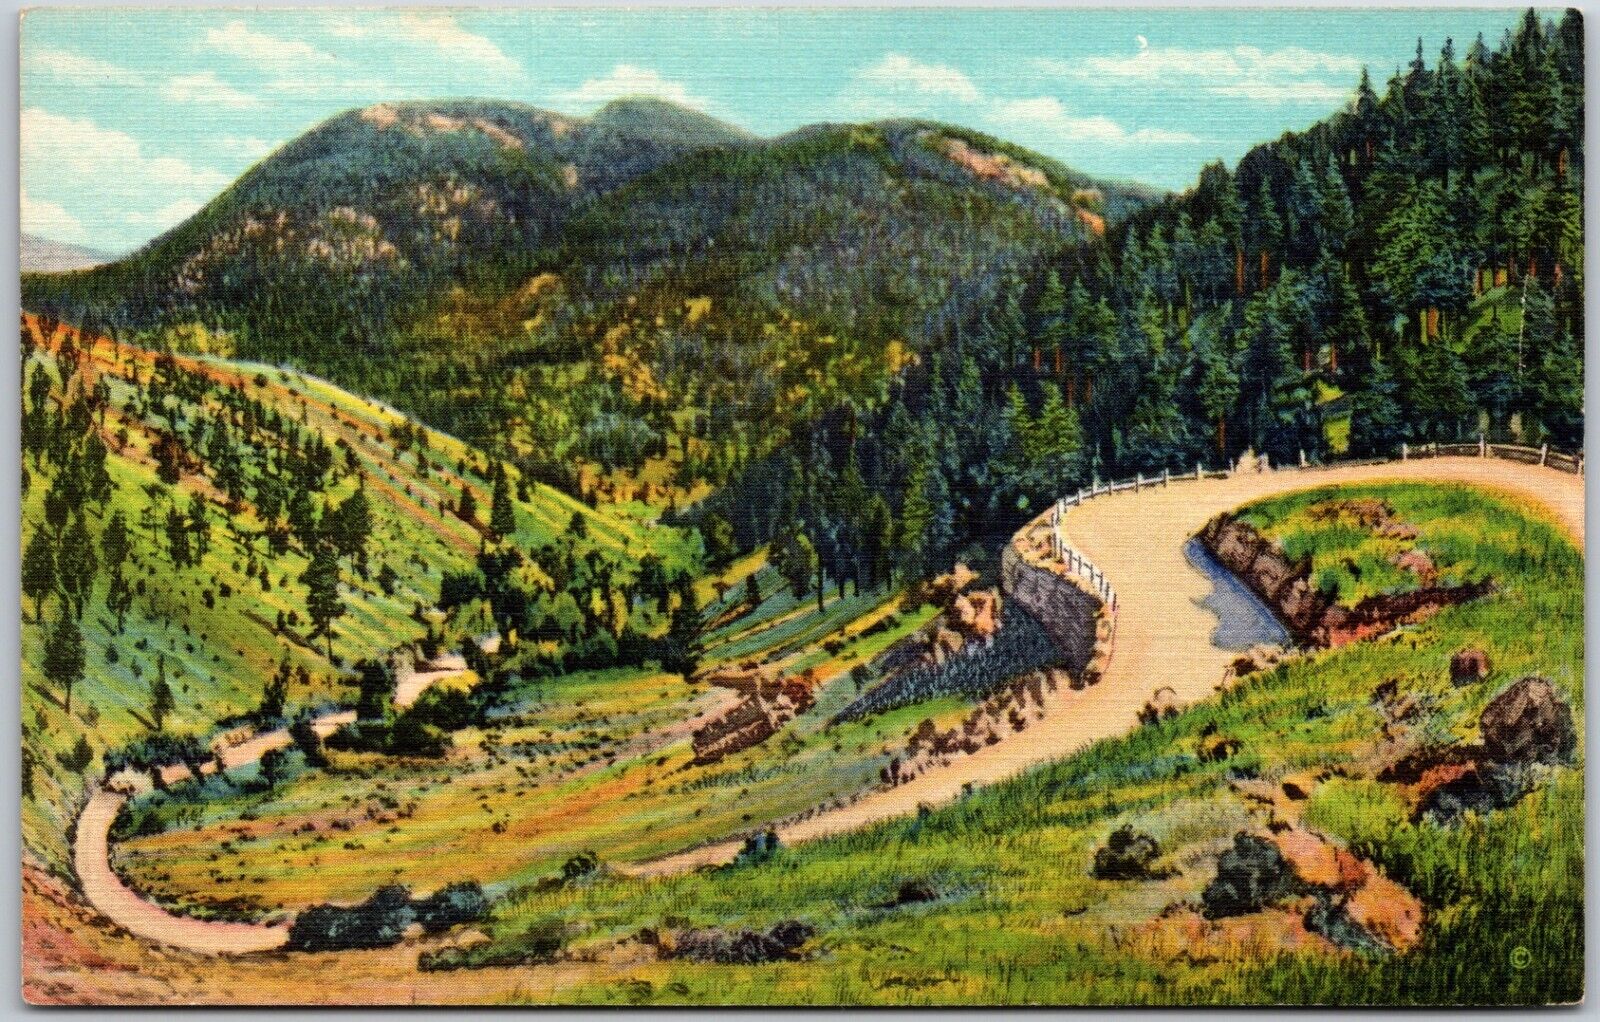 Double Horseshoe Curve on Taos Eagle Nest Raton Highway, New Mexico - Postcard